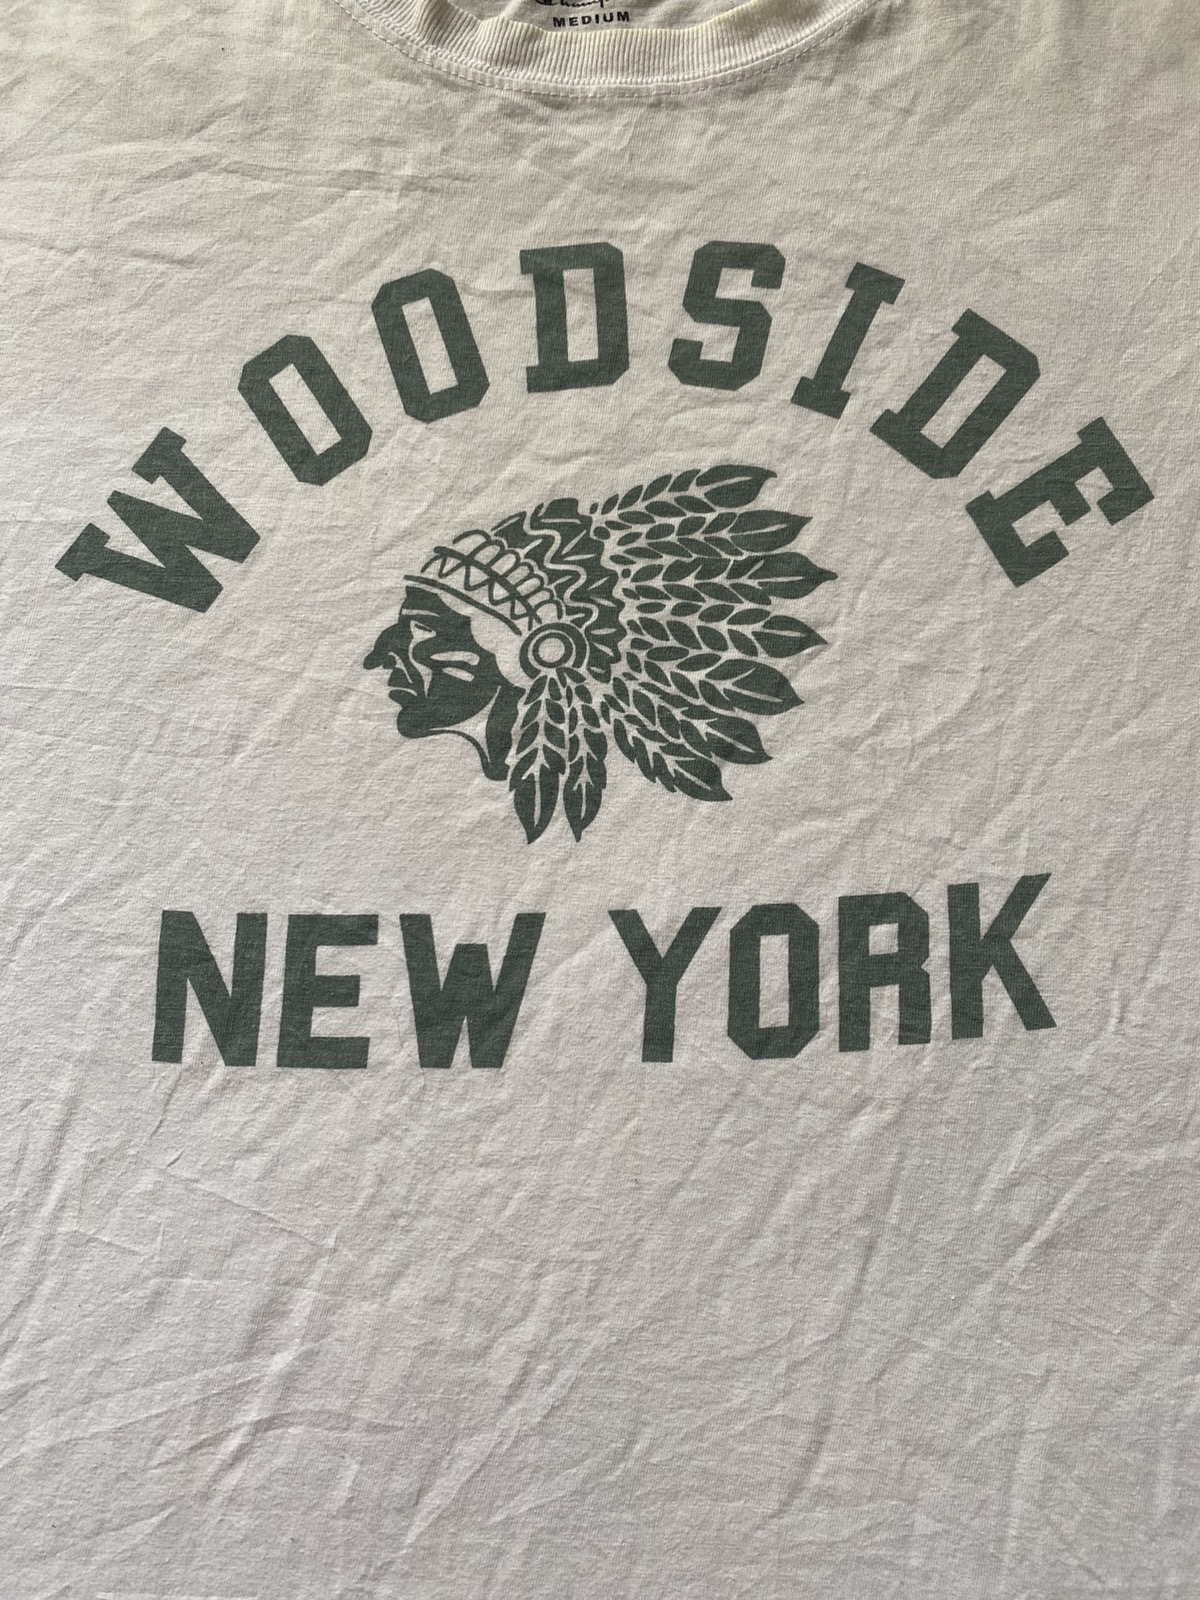 Woodside New York tshirt champion - 2